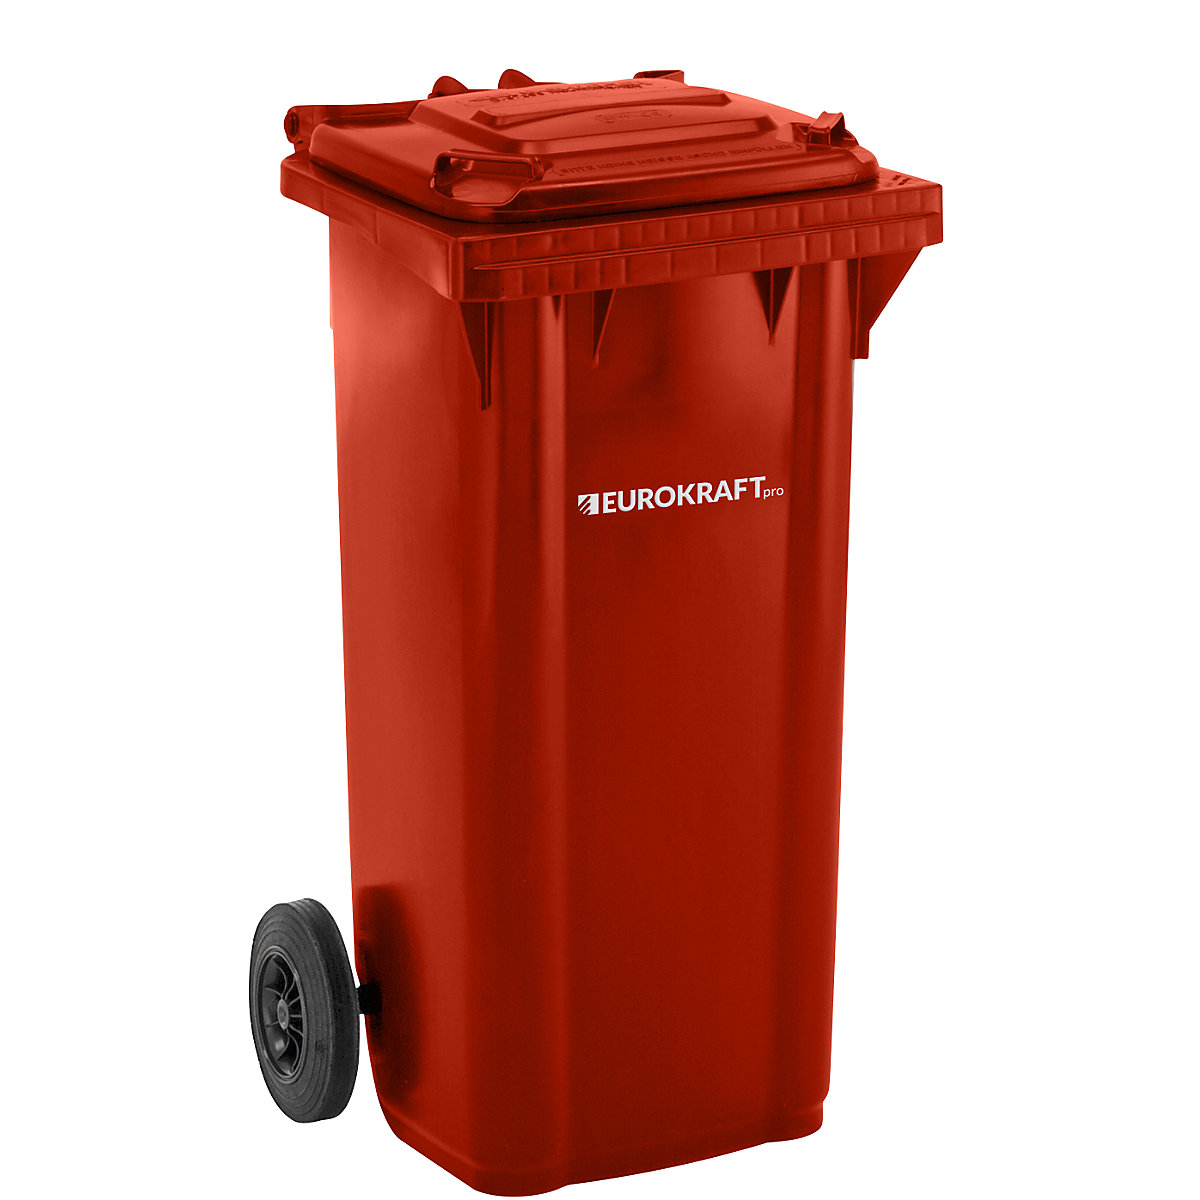 Contenedor de basura de plástico DIN EN 840 – eurokraft pro, capacidad 120 l, A x H x P 505 x 1005 x 555 mm, rojo-3